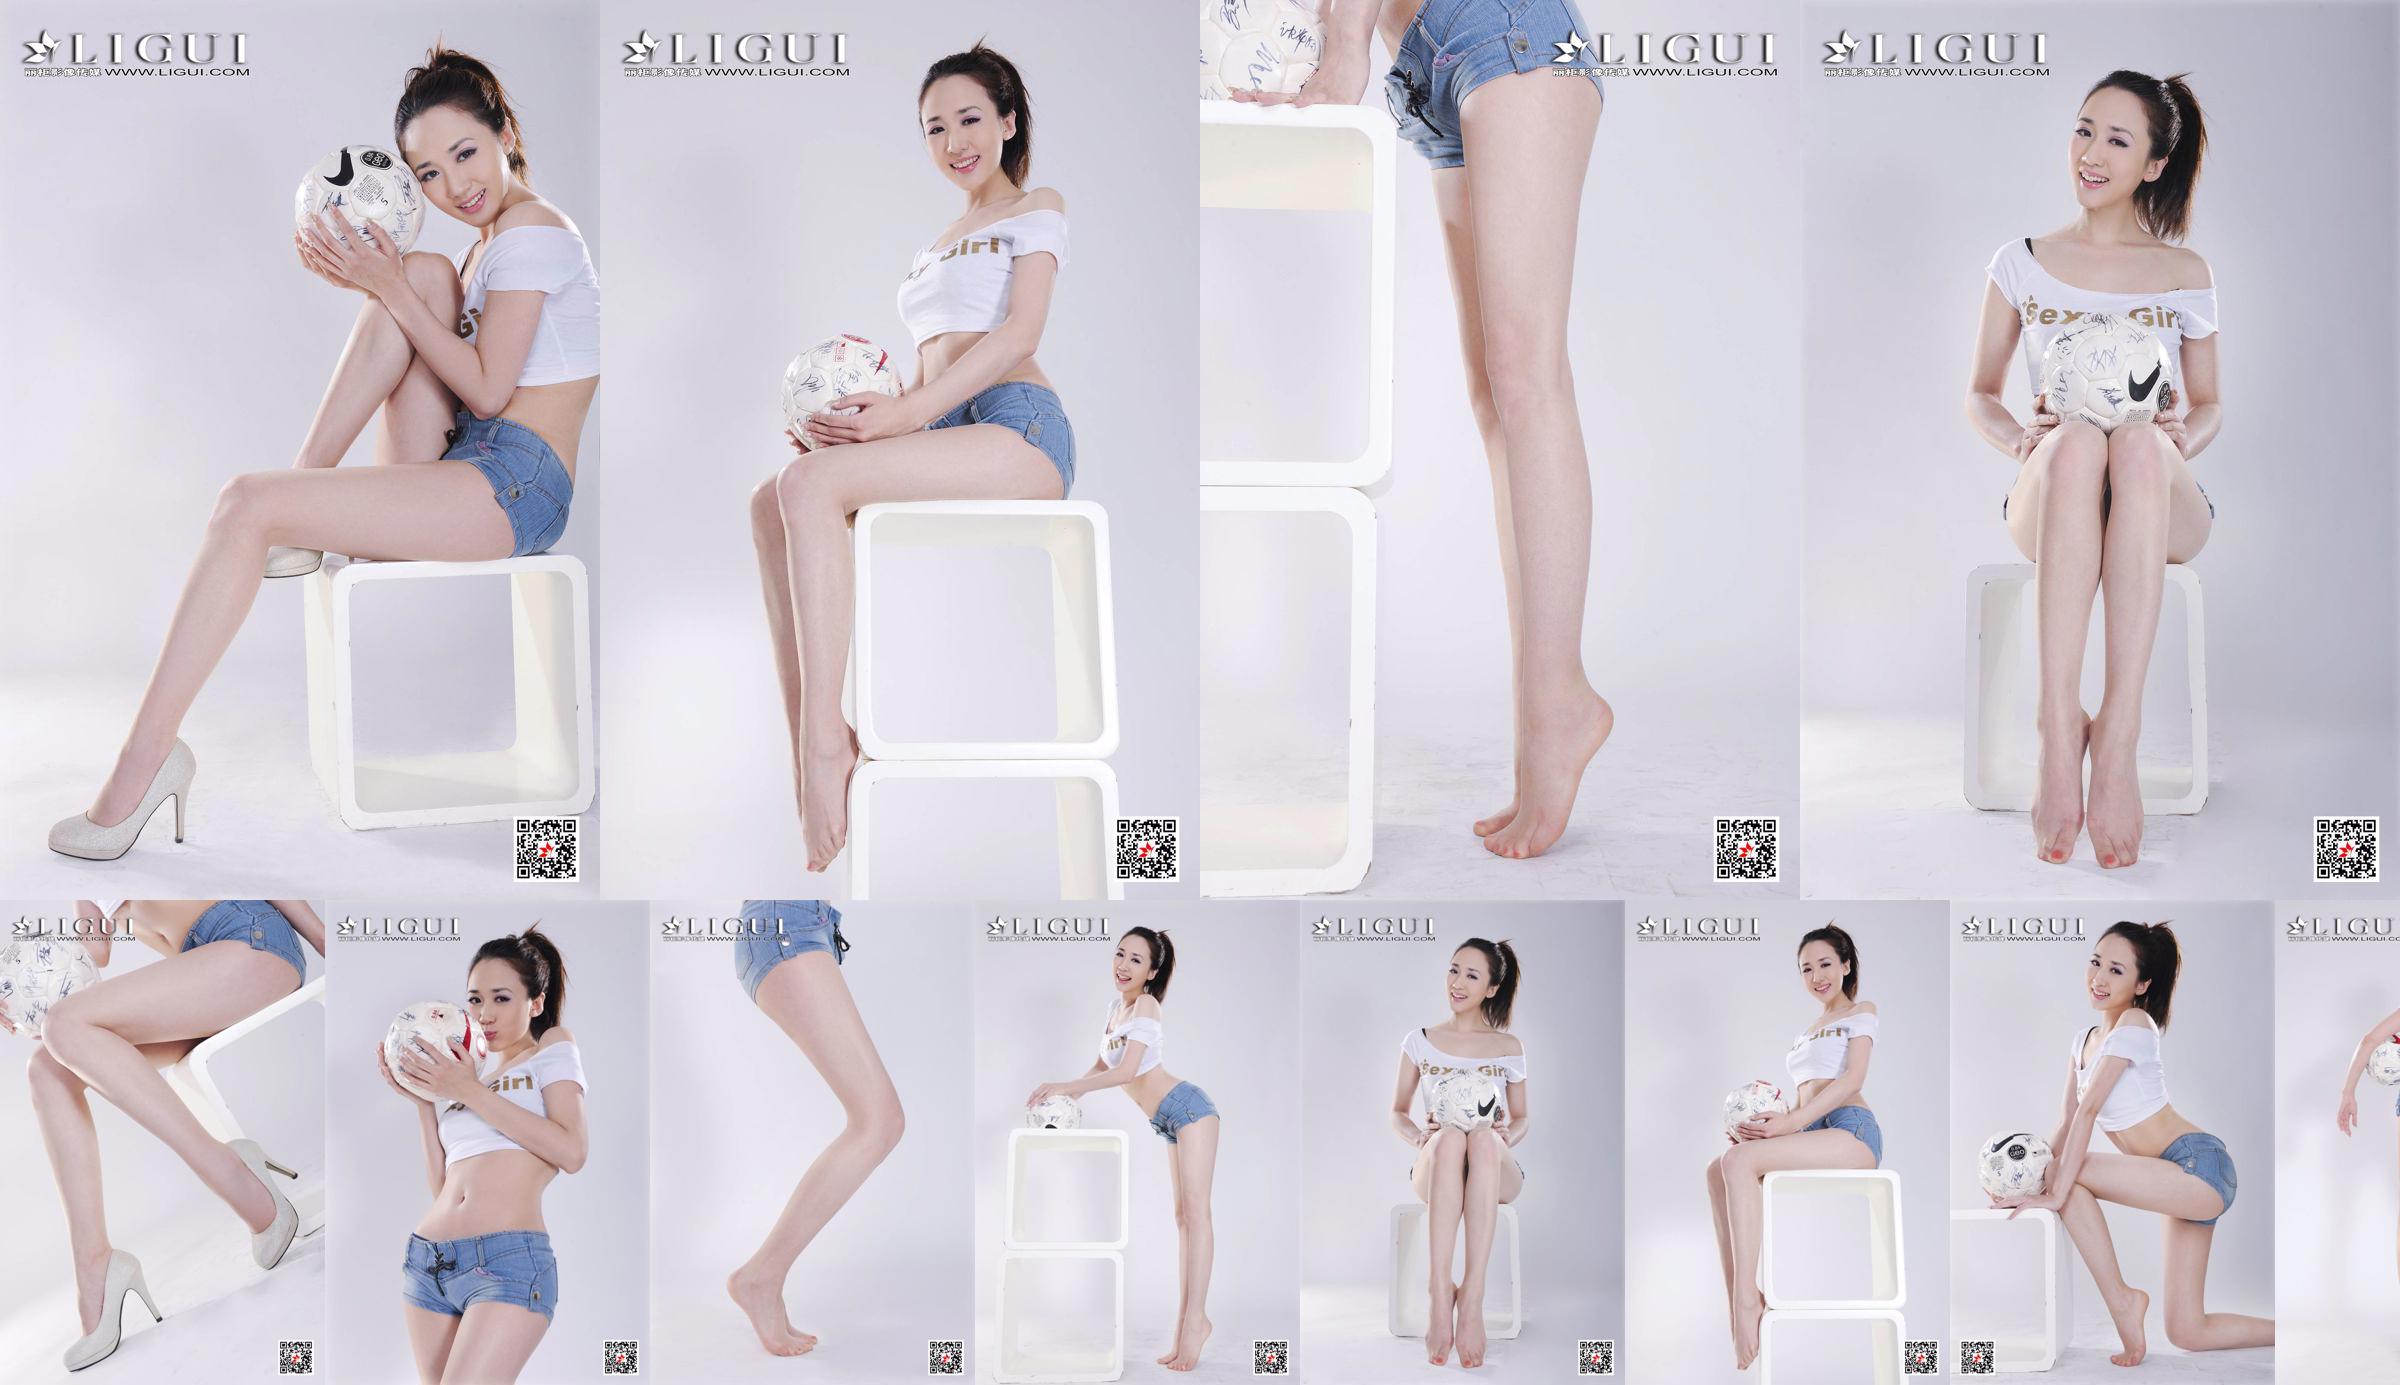 Model Qiu Chen "Gadis Sepak Bola Celana Super Pendek" [LIGUI] No.53cea0 Halaman 5